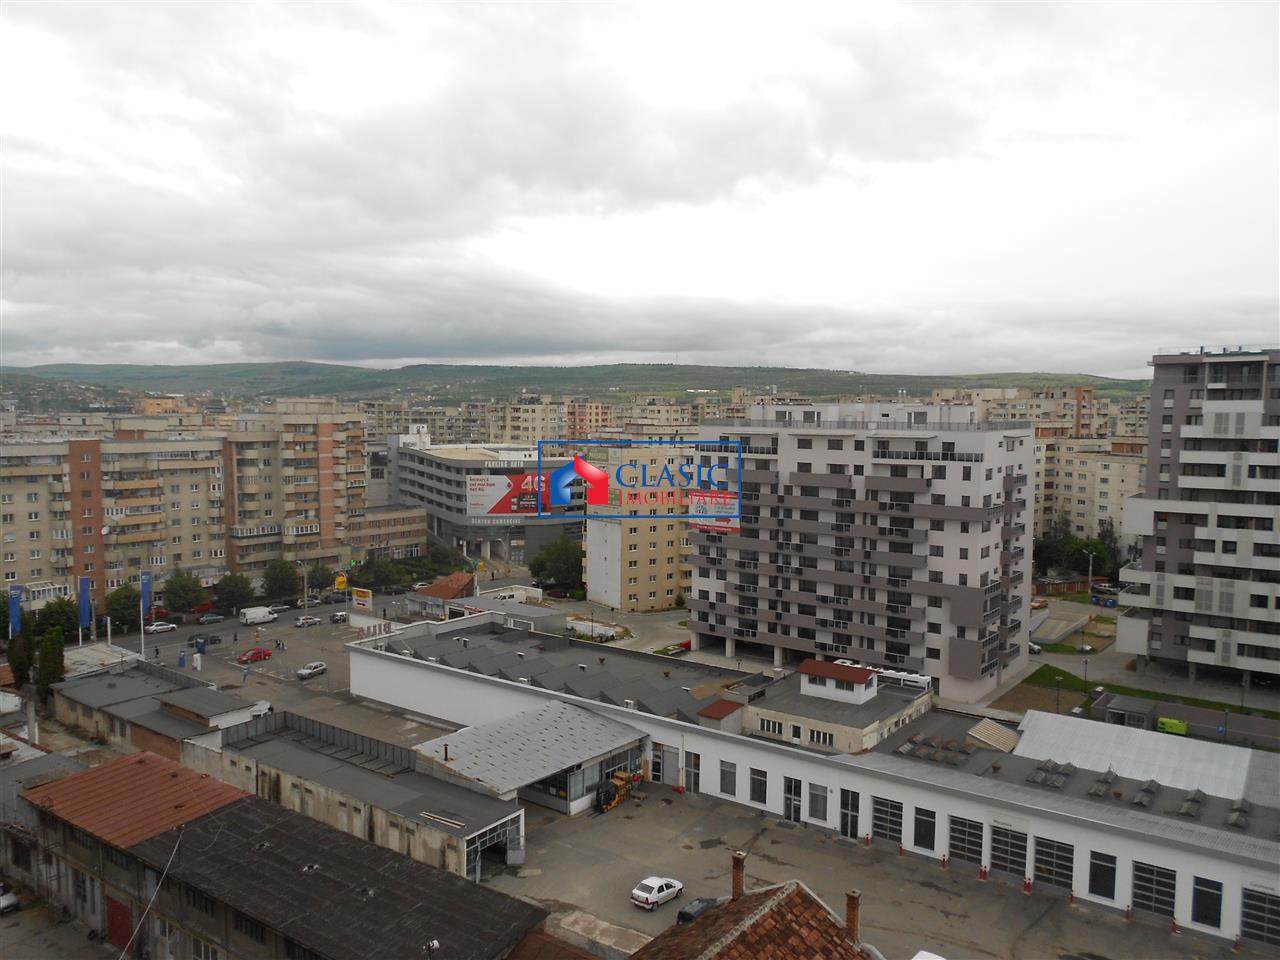 Inchiriere apartament 3 camere in bloc nou zona Marasti  str Dorobantilor, Cluj Napoca